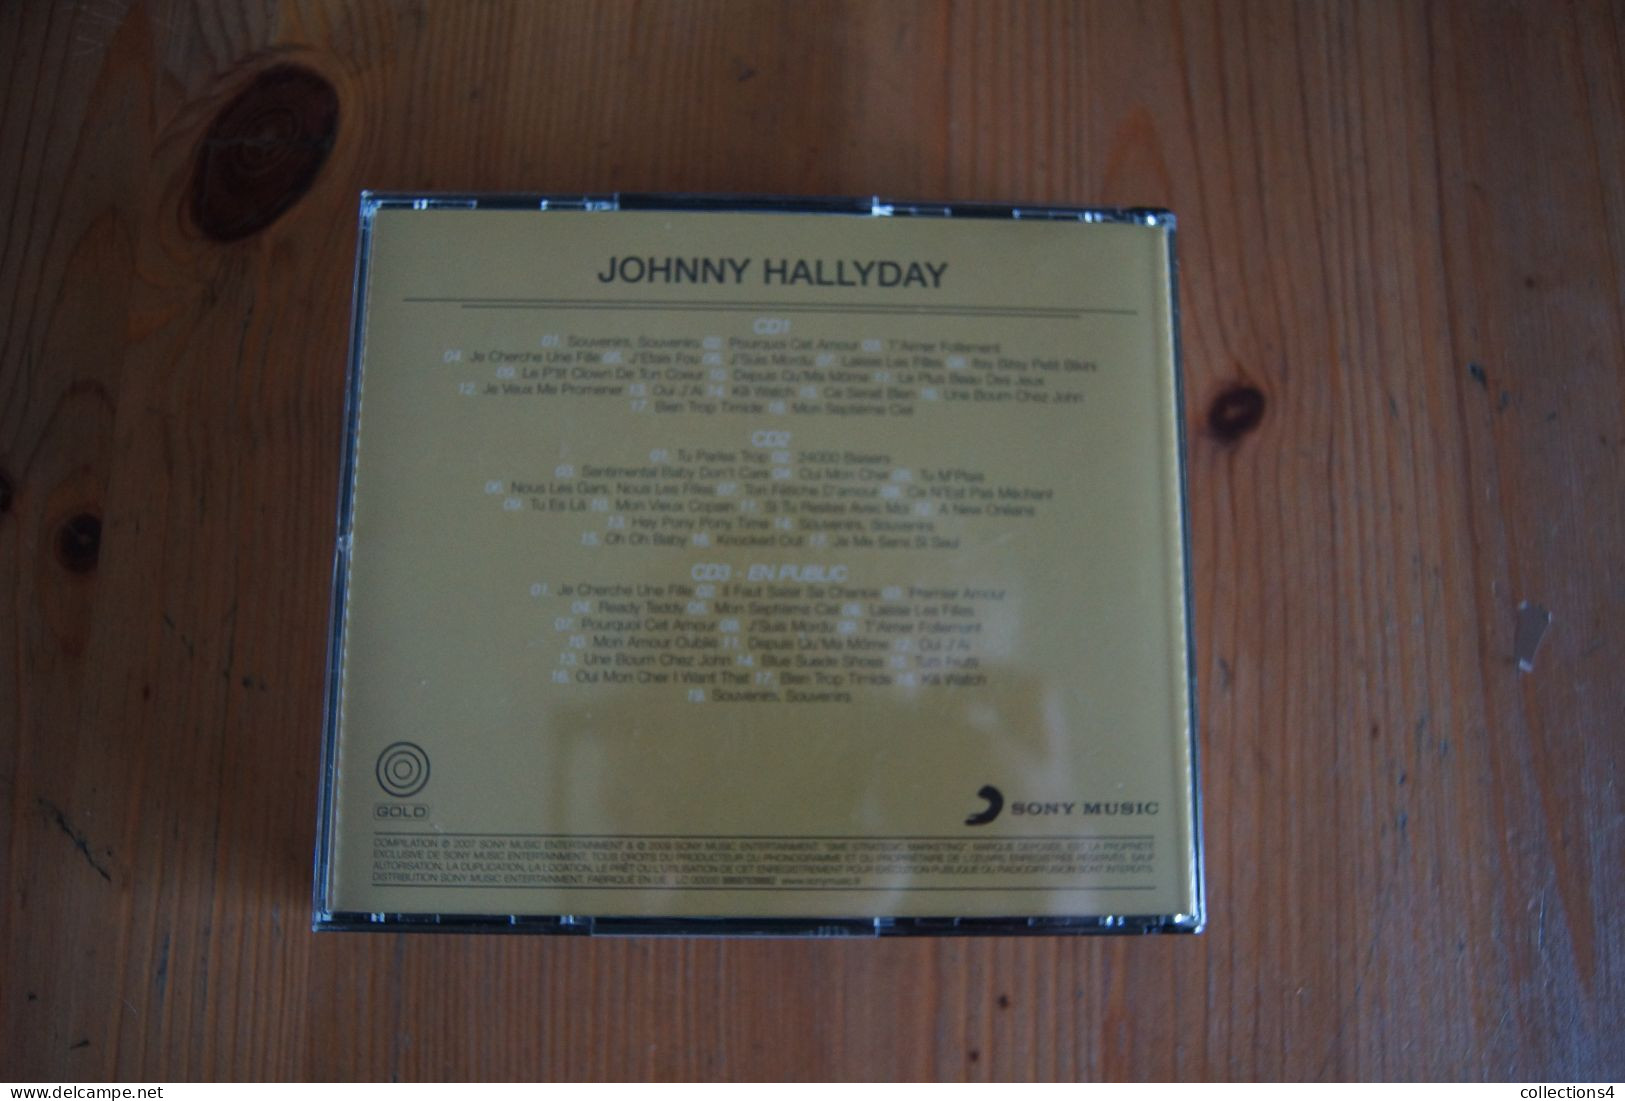 JOHNNY HALLYDAY LES ANNEES VOGUE COFFRET METAL 3 CD VALEUR+ - Rock